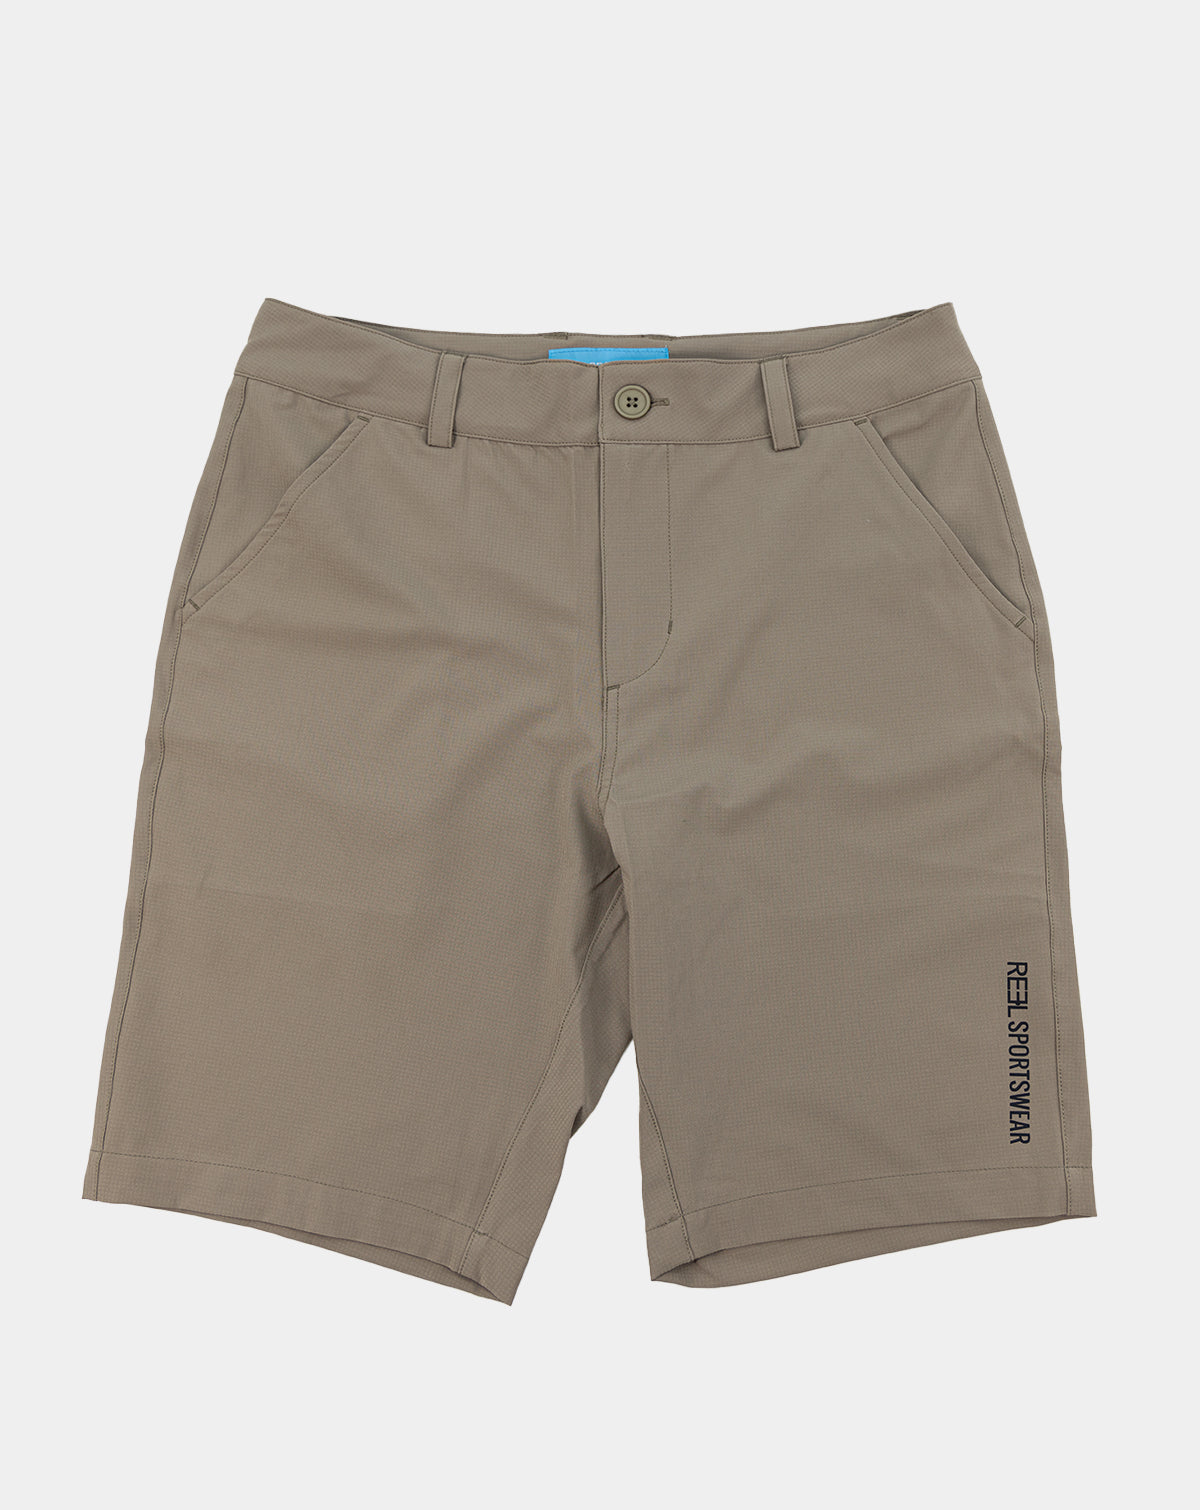 Tidal+ fishing Shorts - Reel Sportswear performance bottoms - Khaki